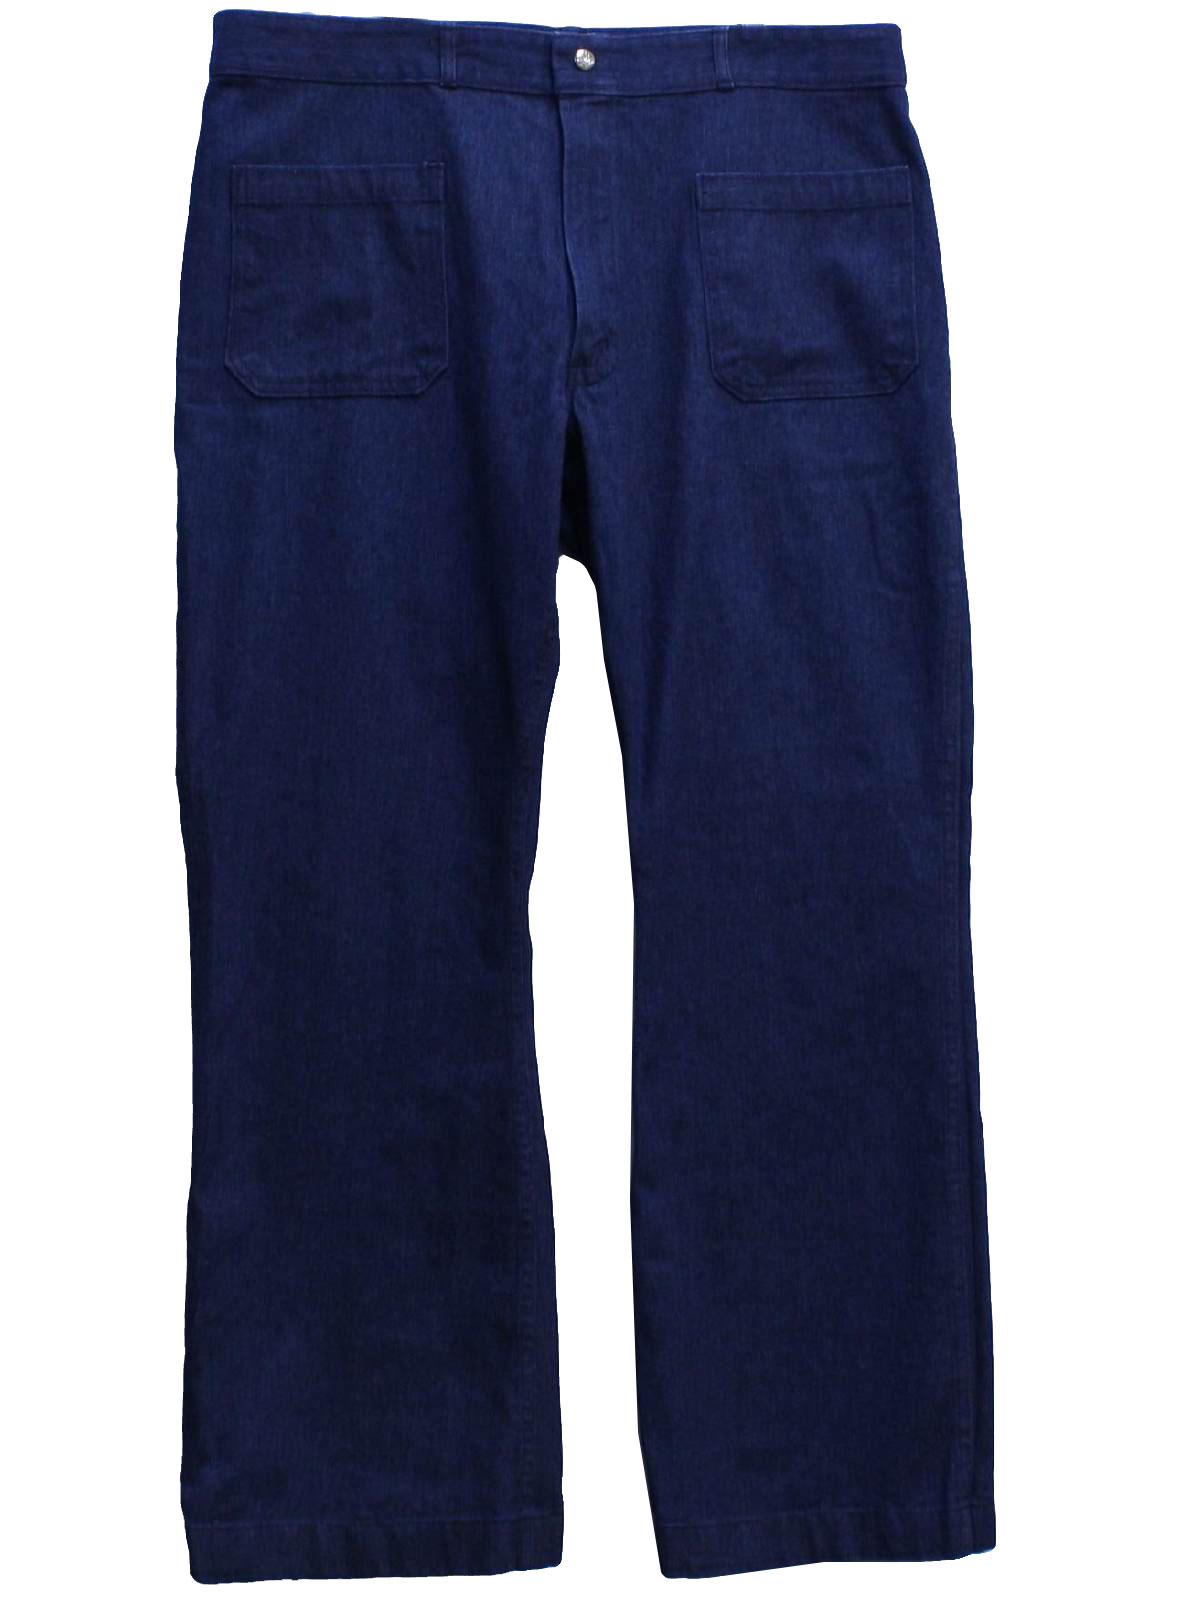 70s Bellbottom Pants (Seafarer): 70s -Seafarer- Mens faded blue cotton ...